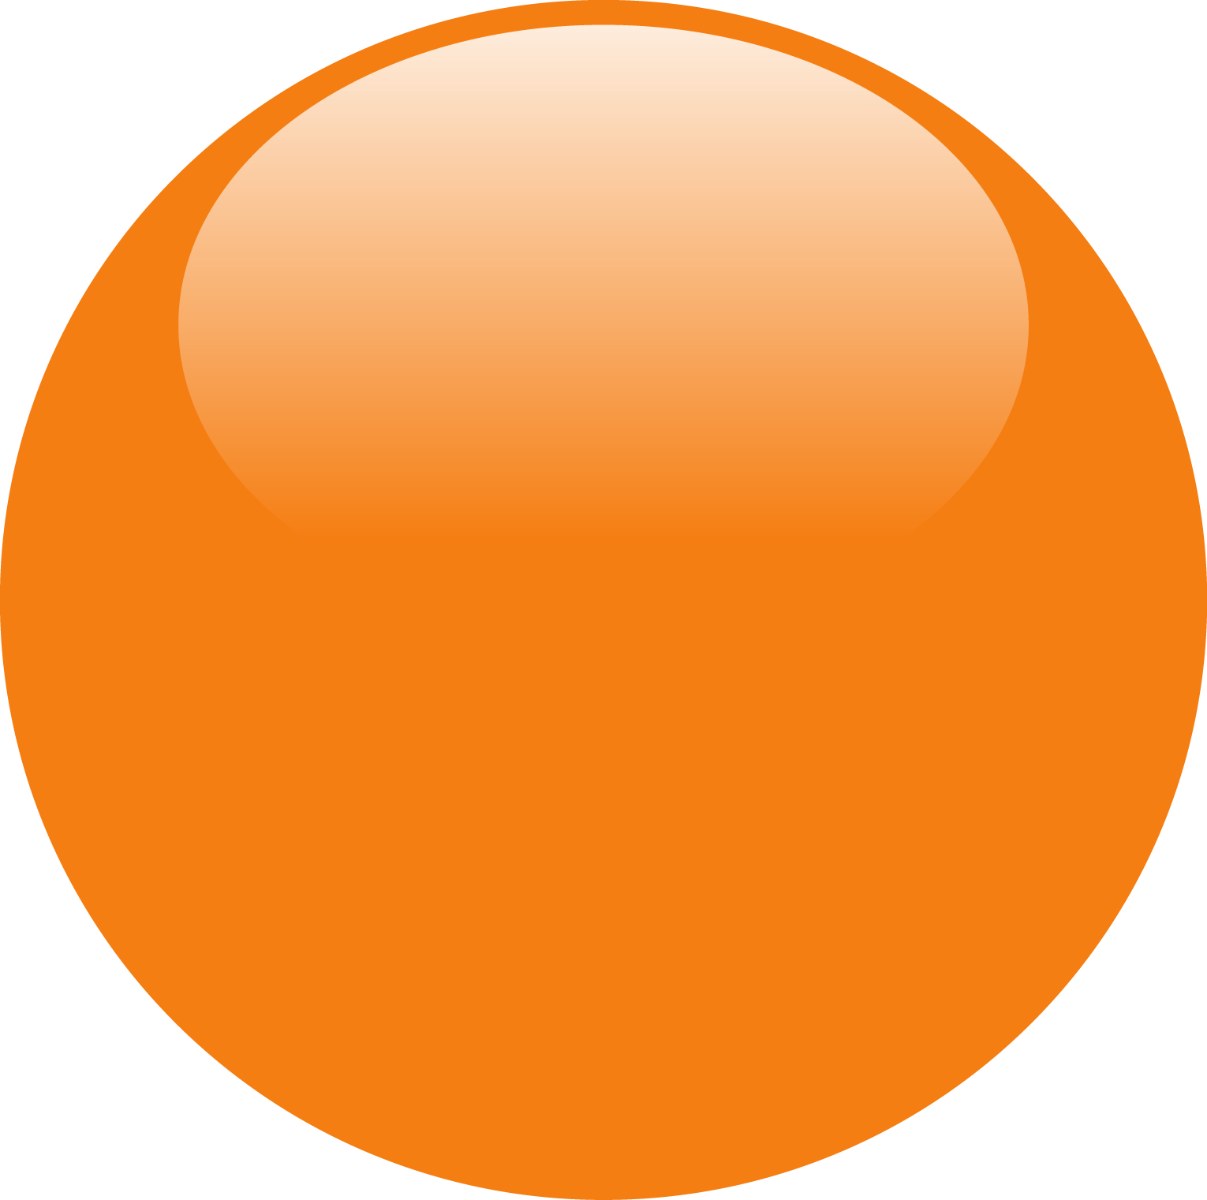 Желто оранжевый круг. Оранжевый круг. Оранжевые кружочки. Круг оранжевого цвета. Овал оранжевый.